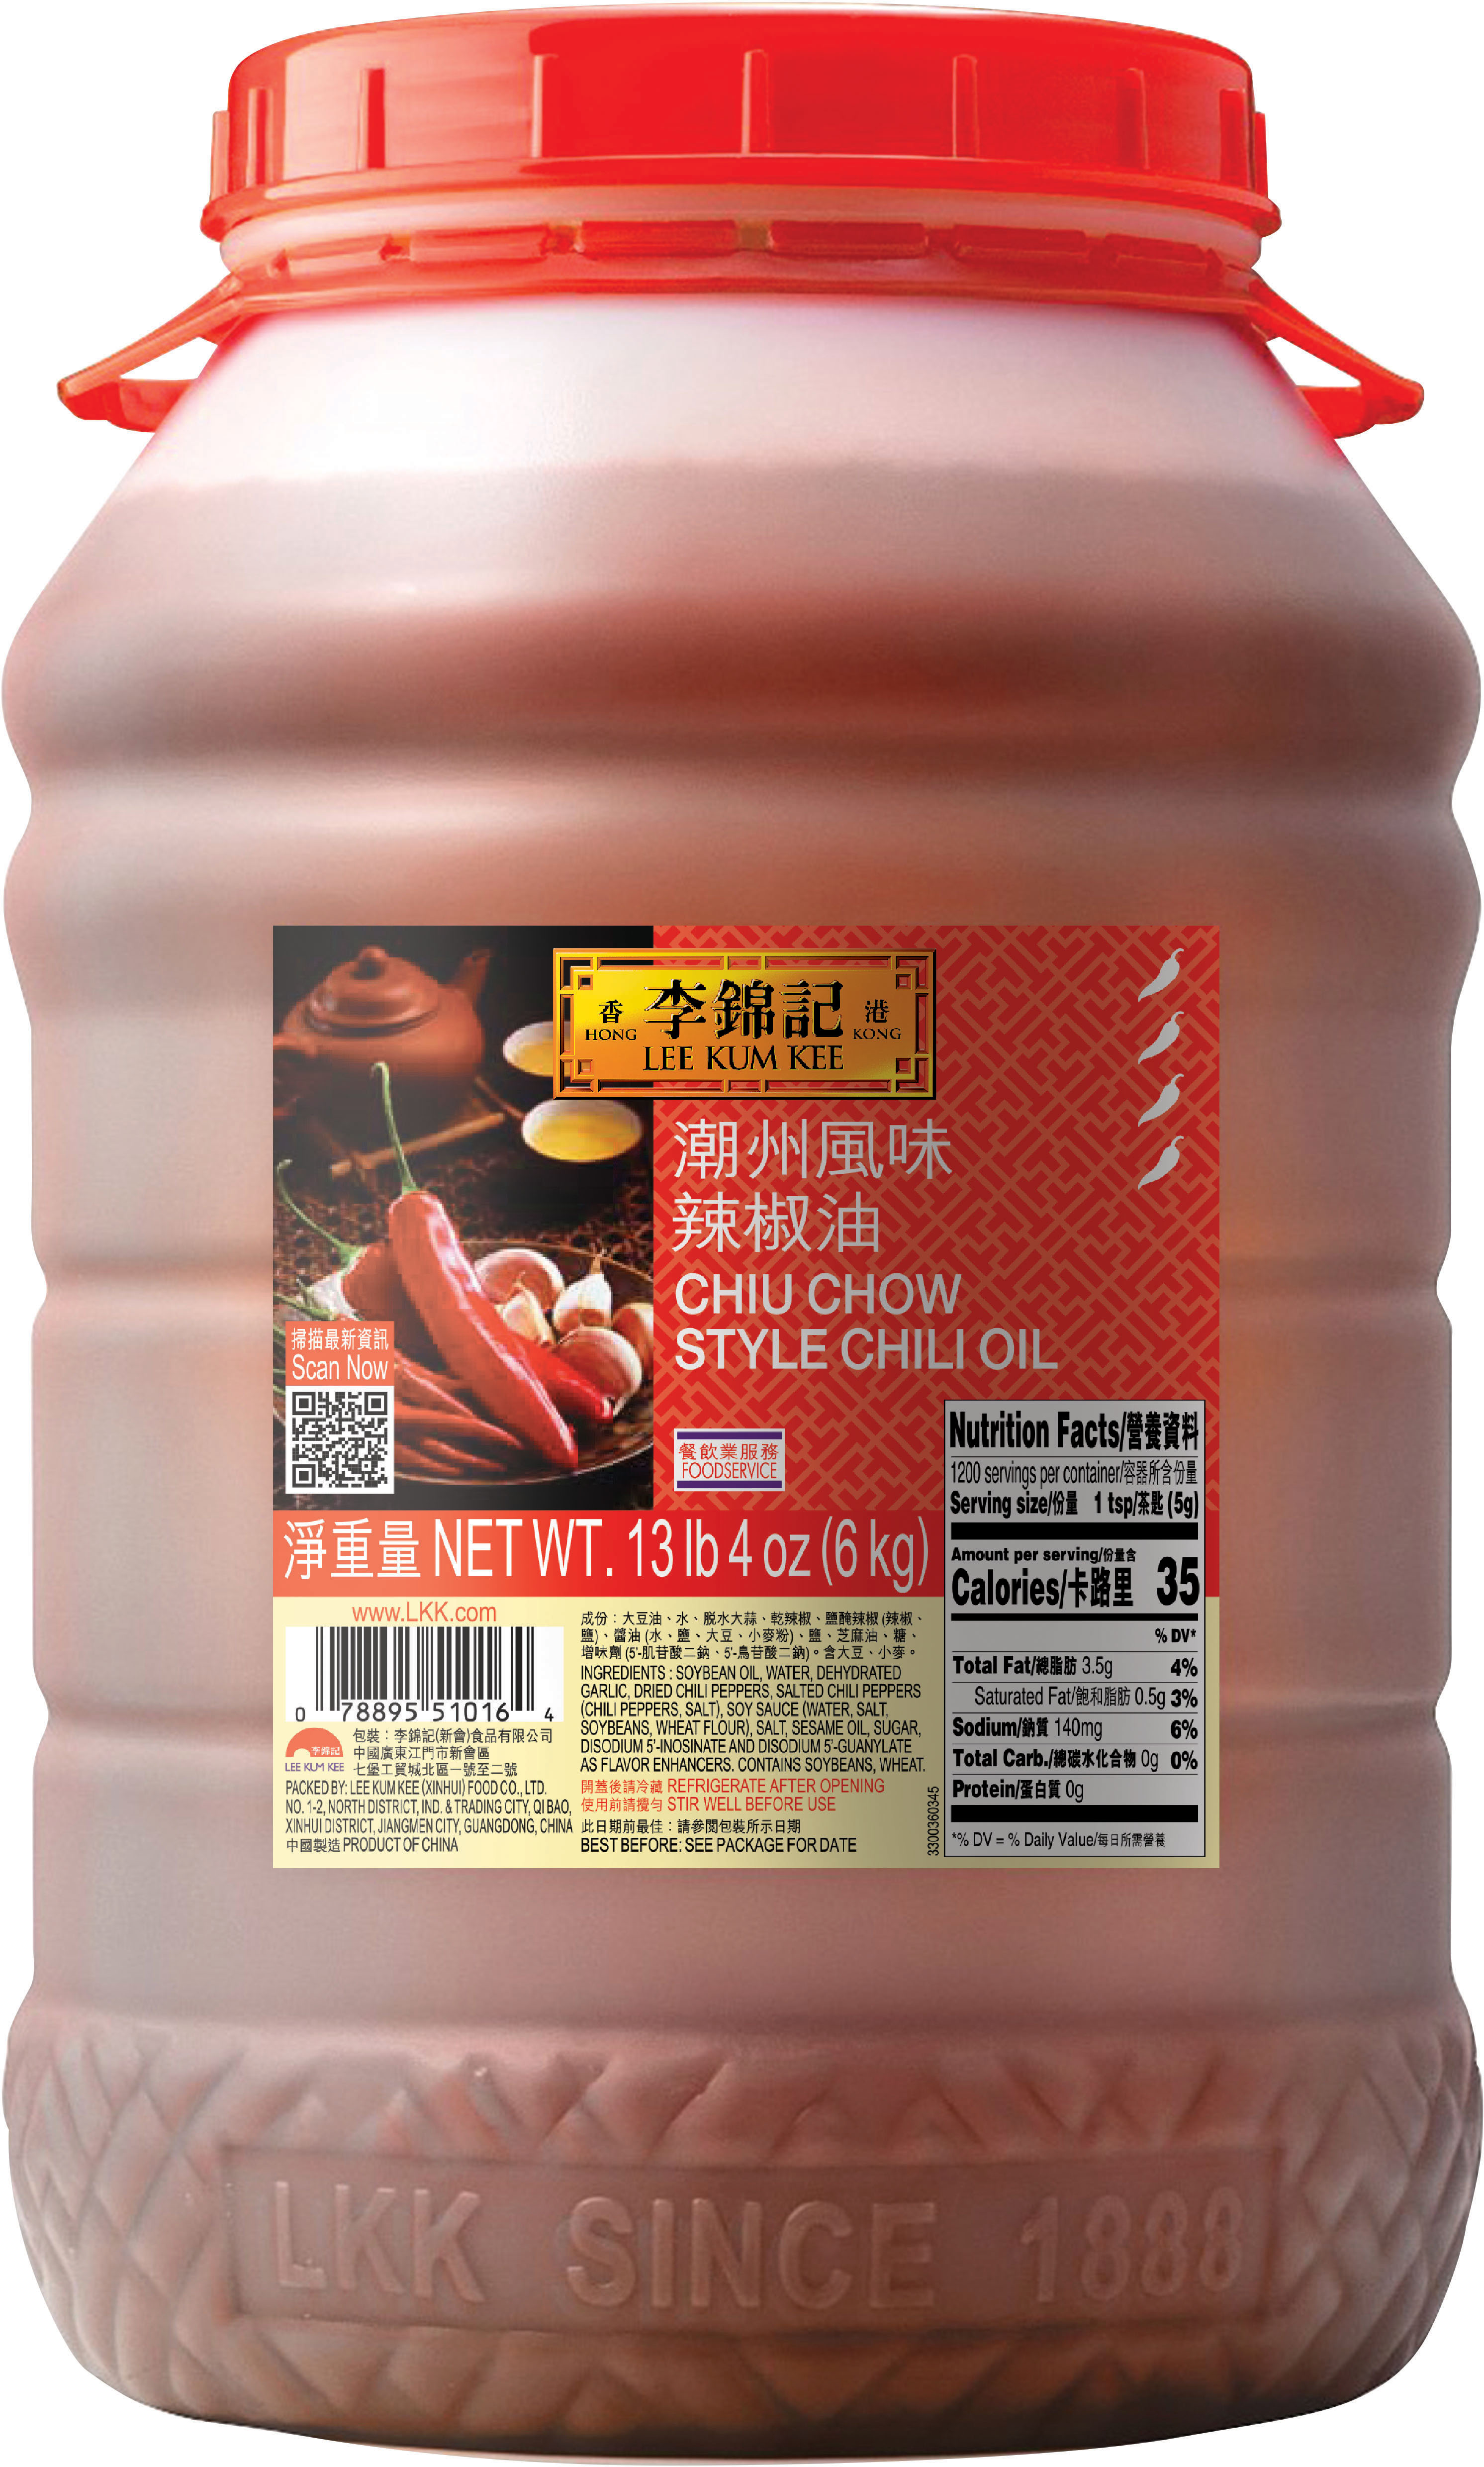 Chiu Chow Style Chili Oil, 6 kg